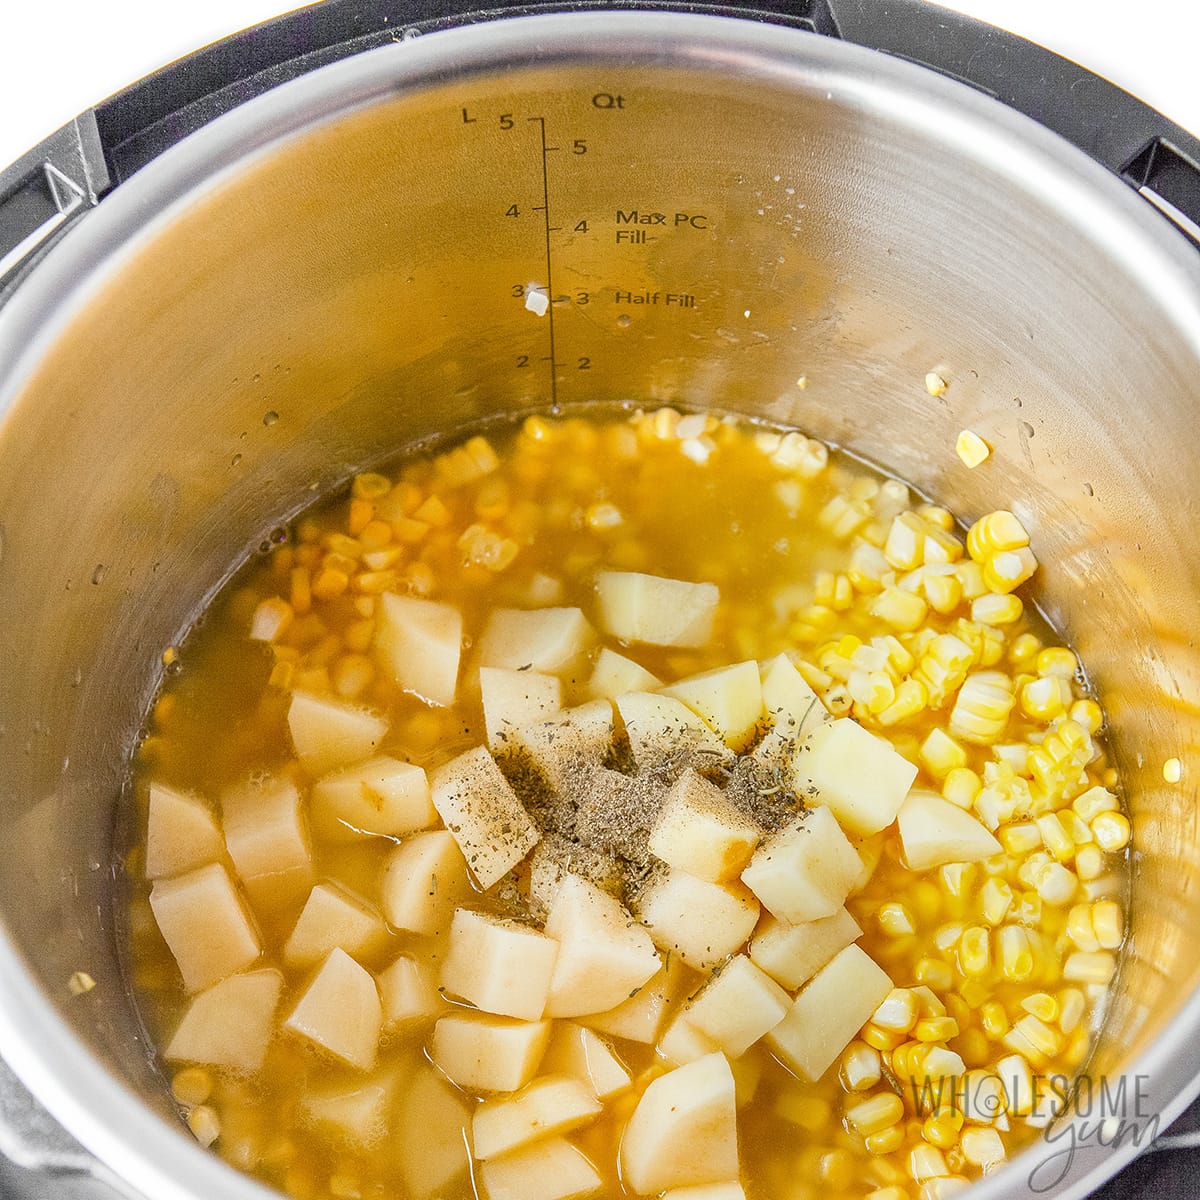 Corn with potatoes, broth, and seasonings added.